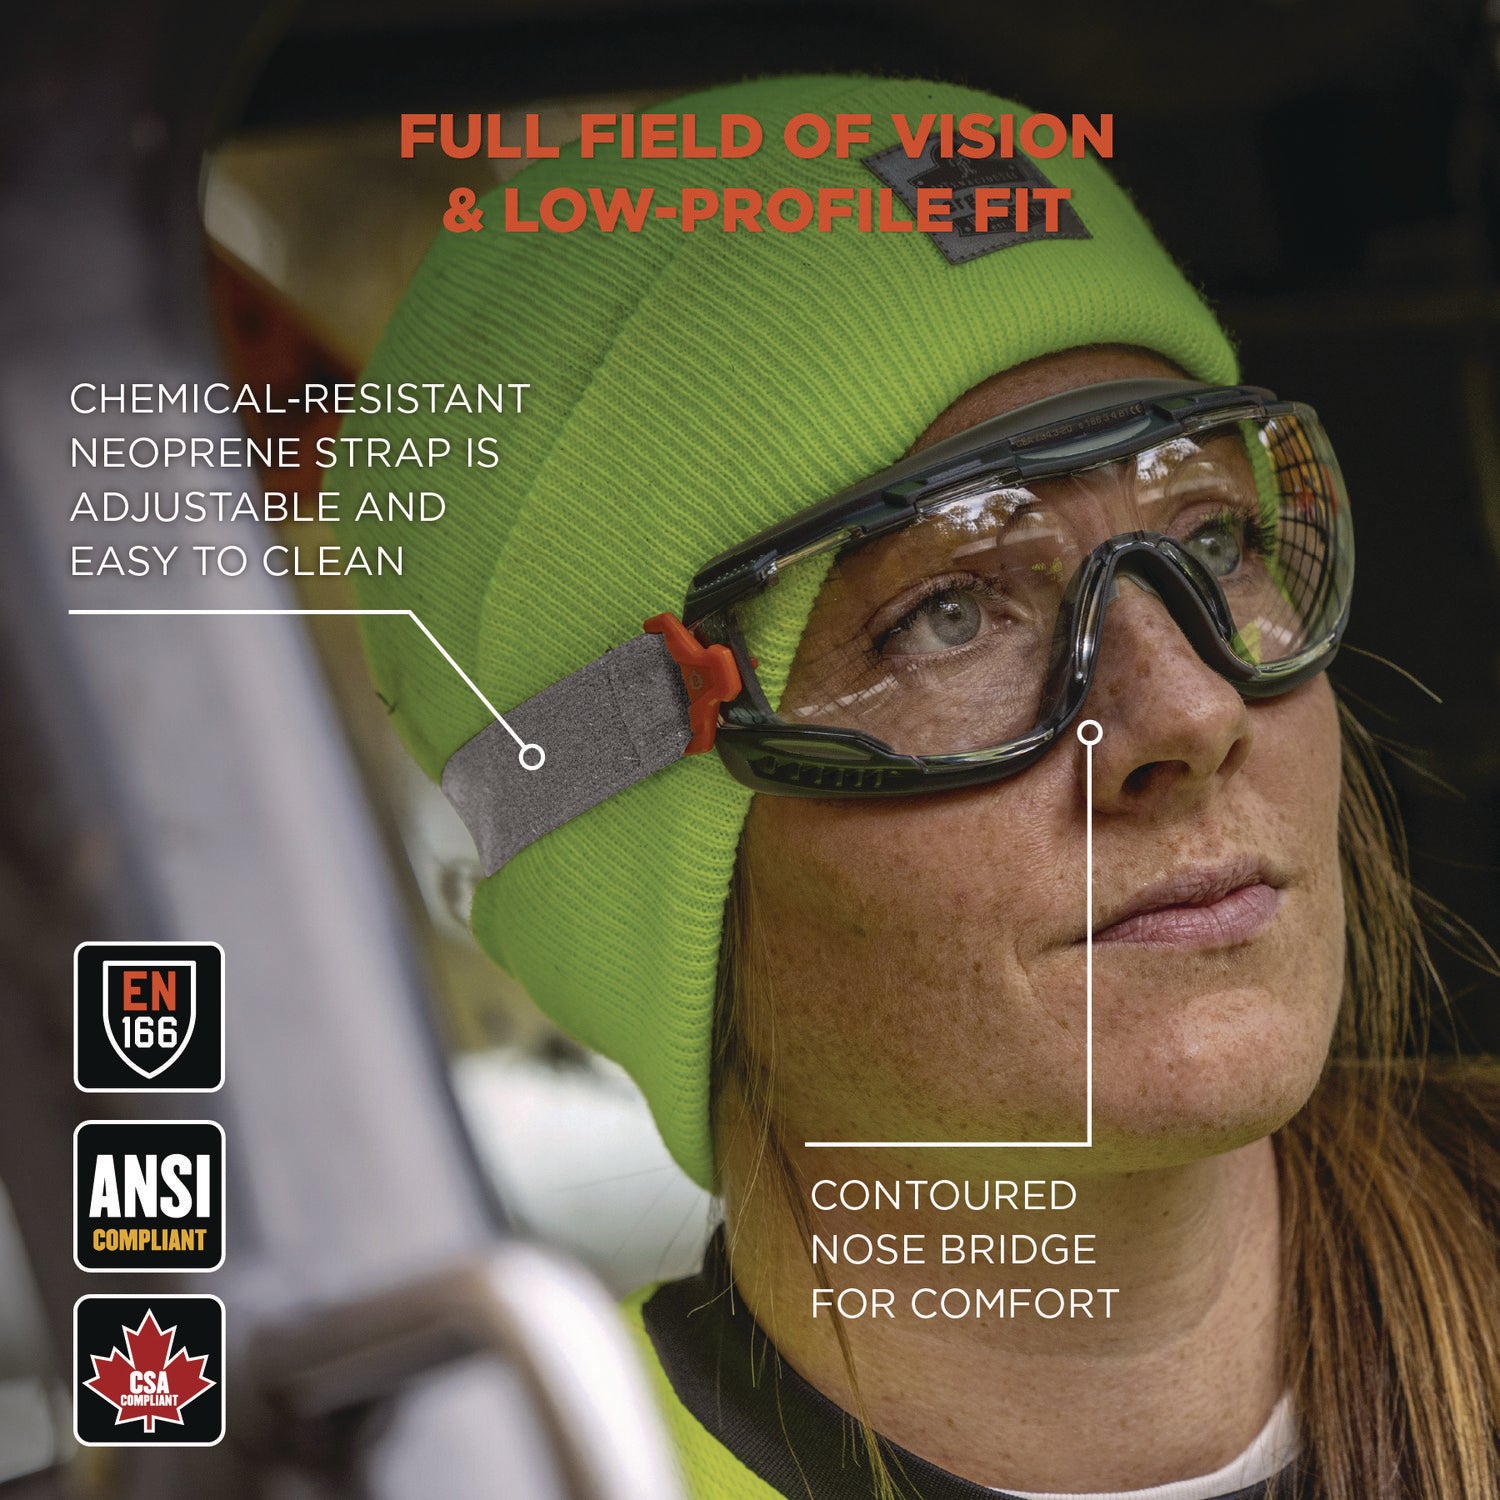 ergodyne? Skullerz ARKYN Anti-Scratch and Enhanced Anti-Fog Safety Goggles with Neoprene Strap, Clear, Ships in 1-3 Business Days